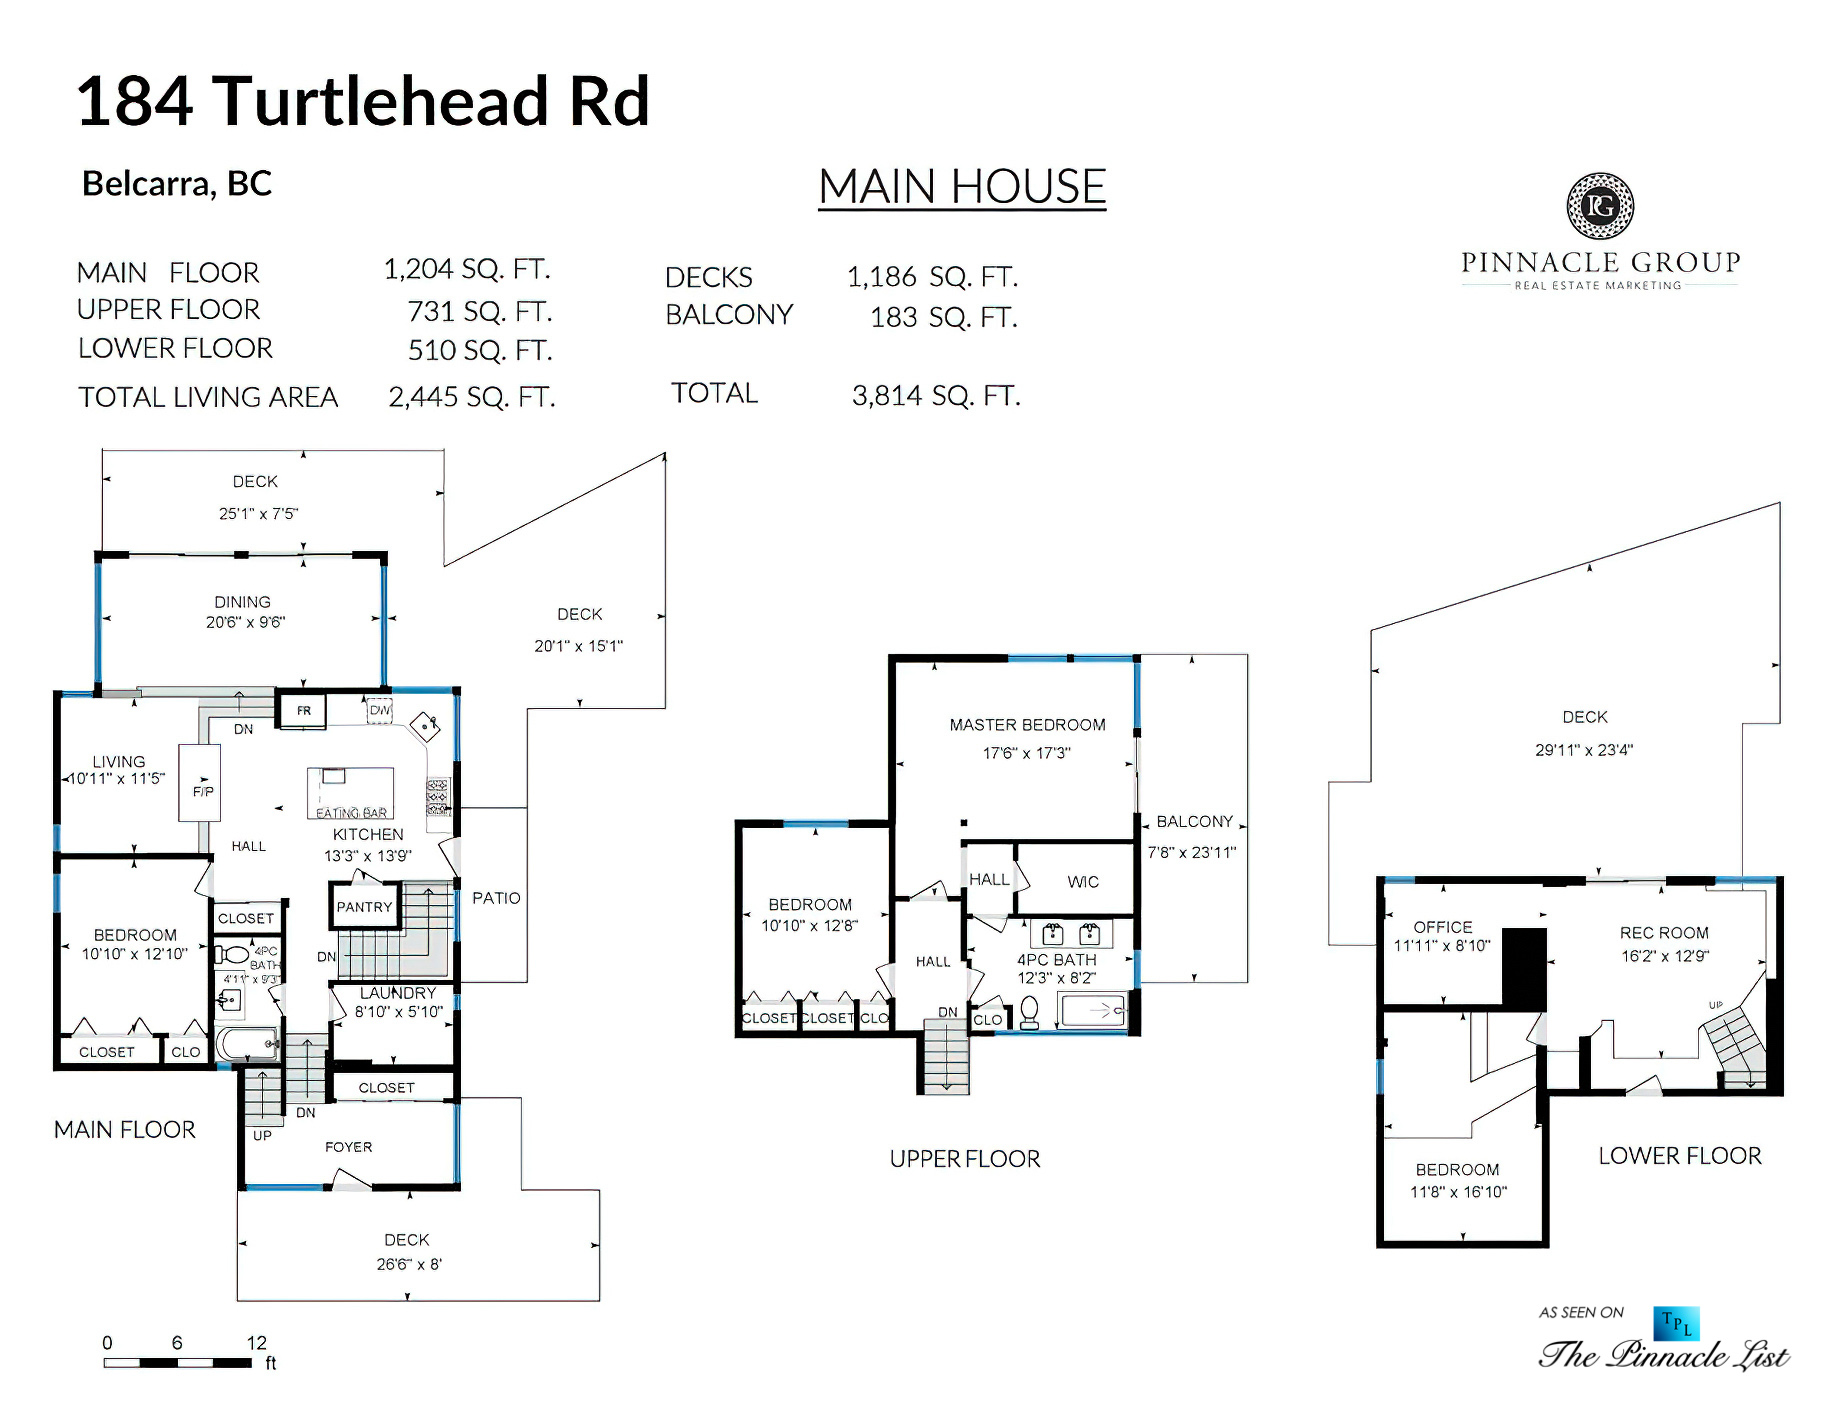 184 Turtlehead Rd, Belcarra, BC, Canada – Floor Plans